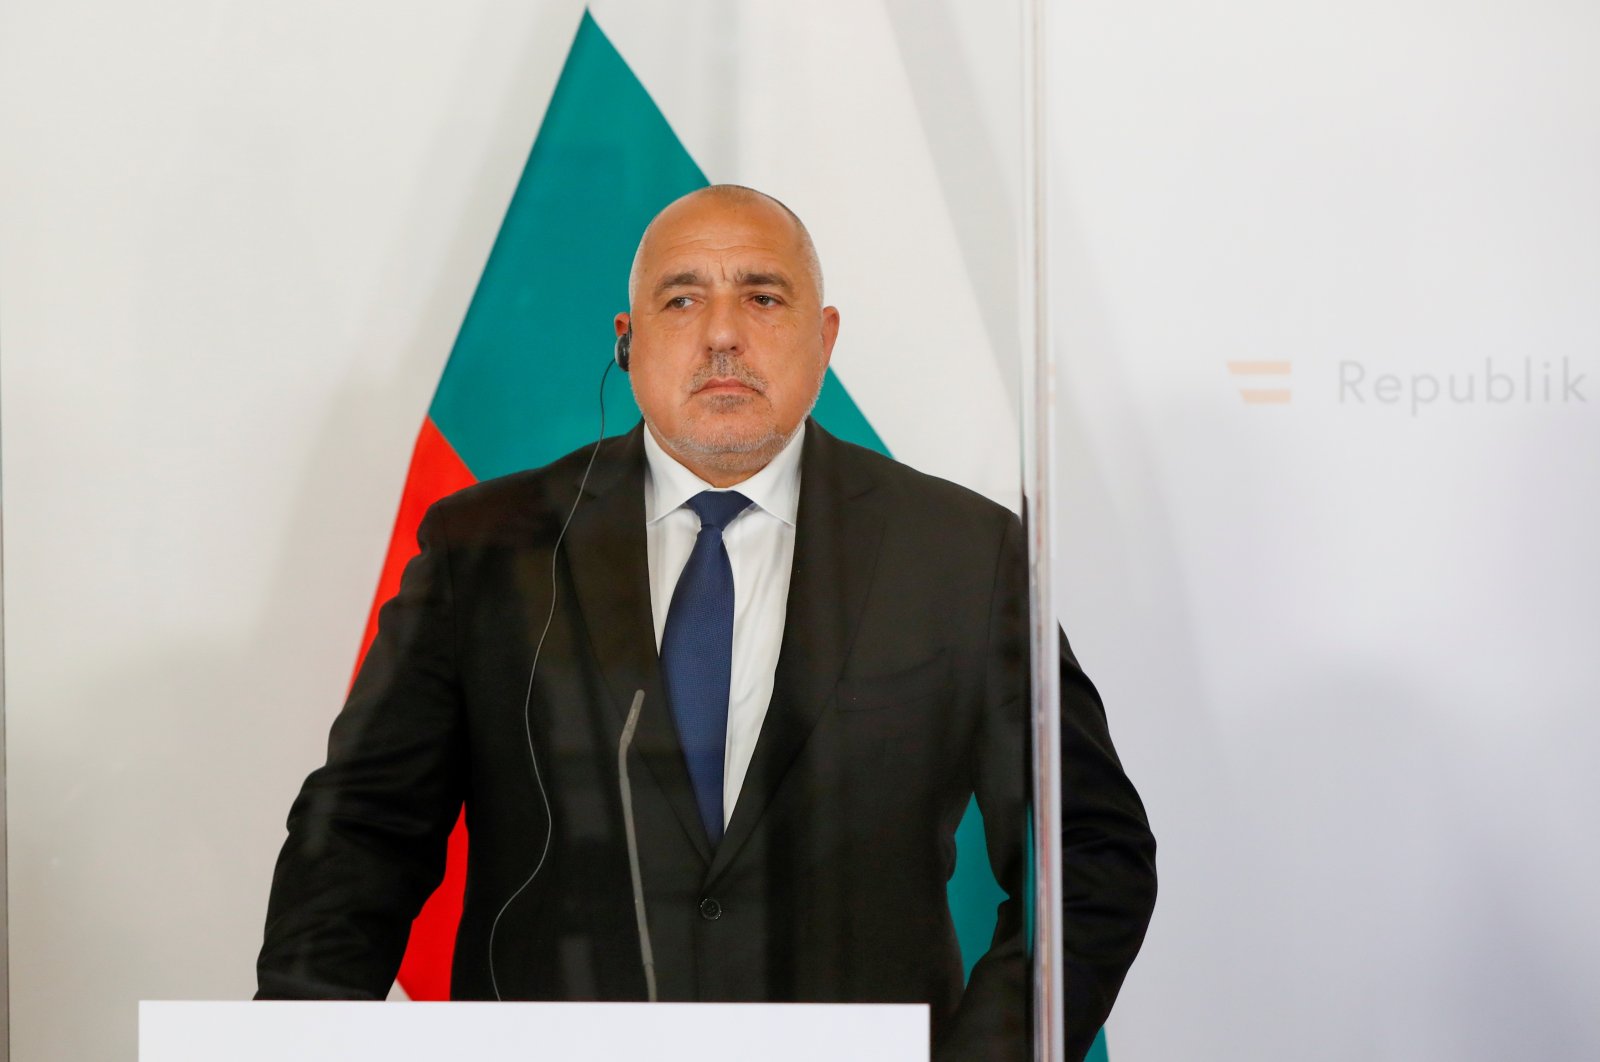 Bulgaria's Prime Minister Boyko Borissov attends a news conference in Vienna, Austria, March 16, 2021. (REUTERS Photo)